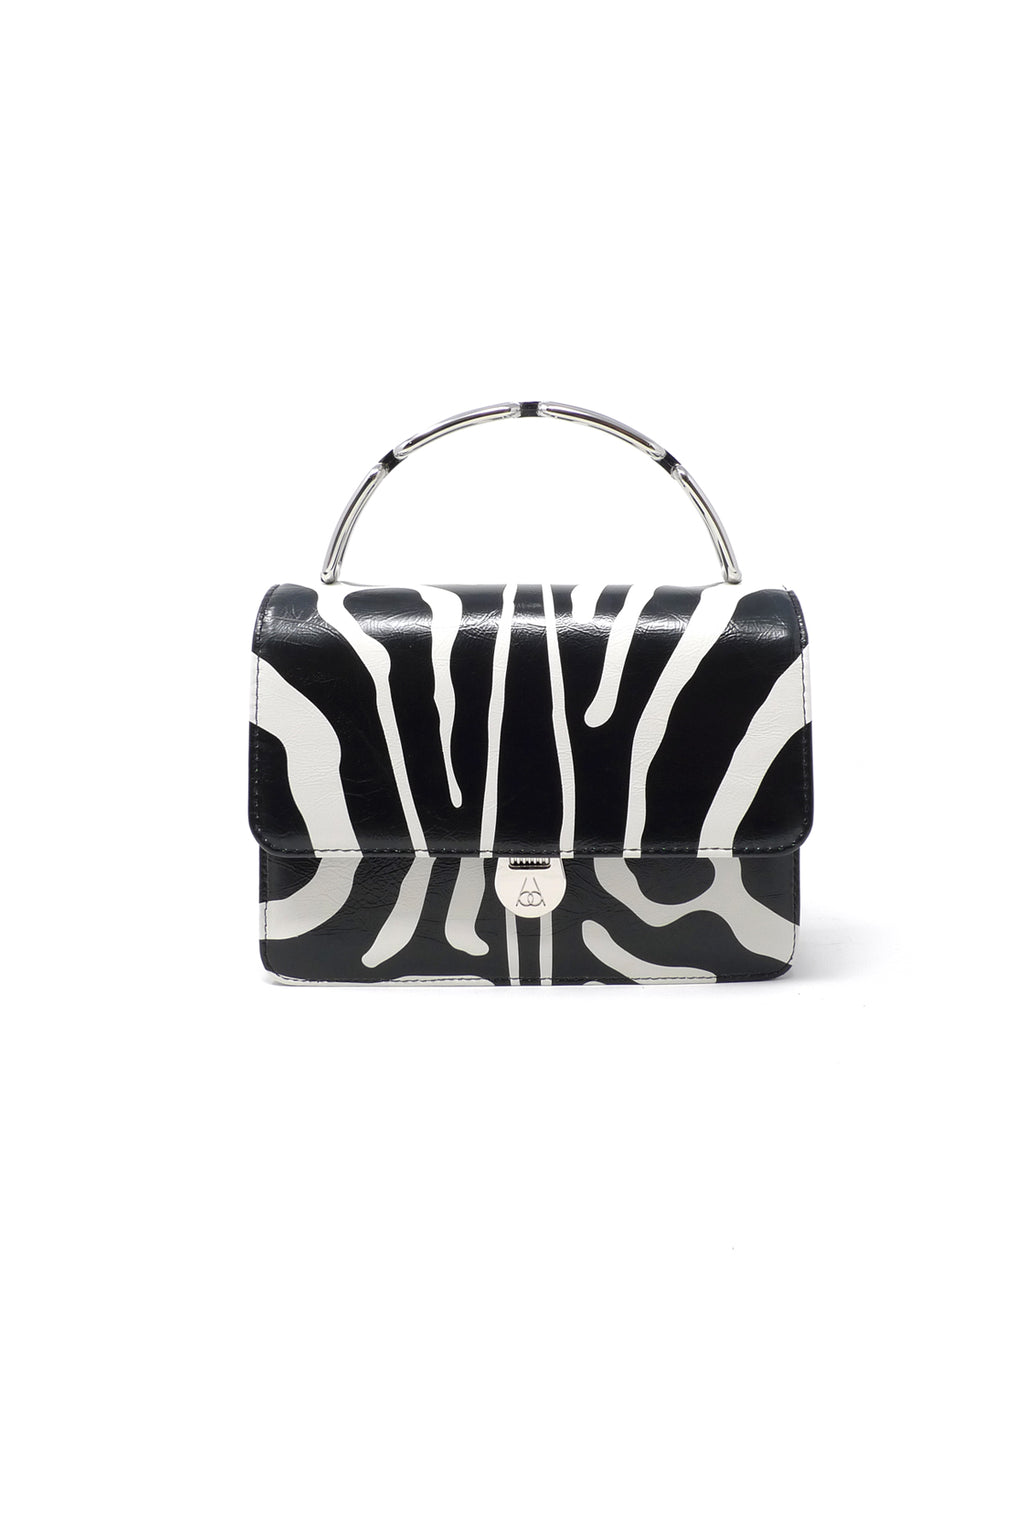 SHI Journeys Purse Handbag Black Trendy Magnetic Snap Closure Animal Print